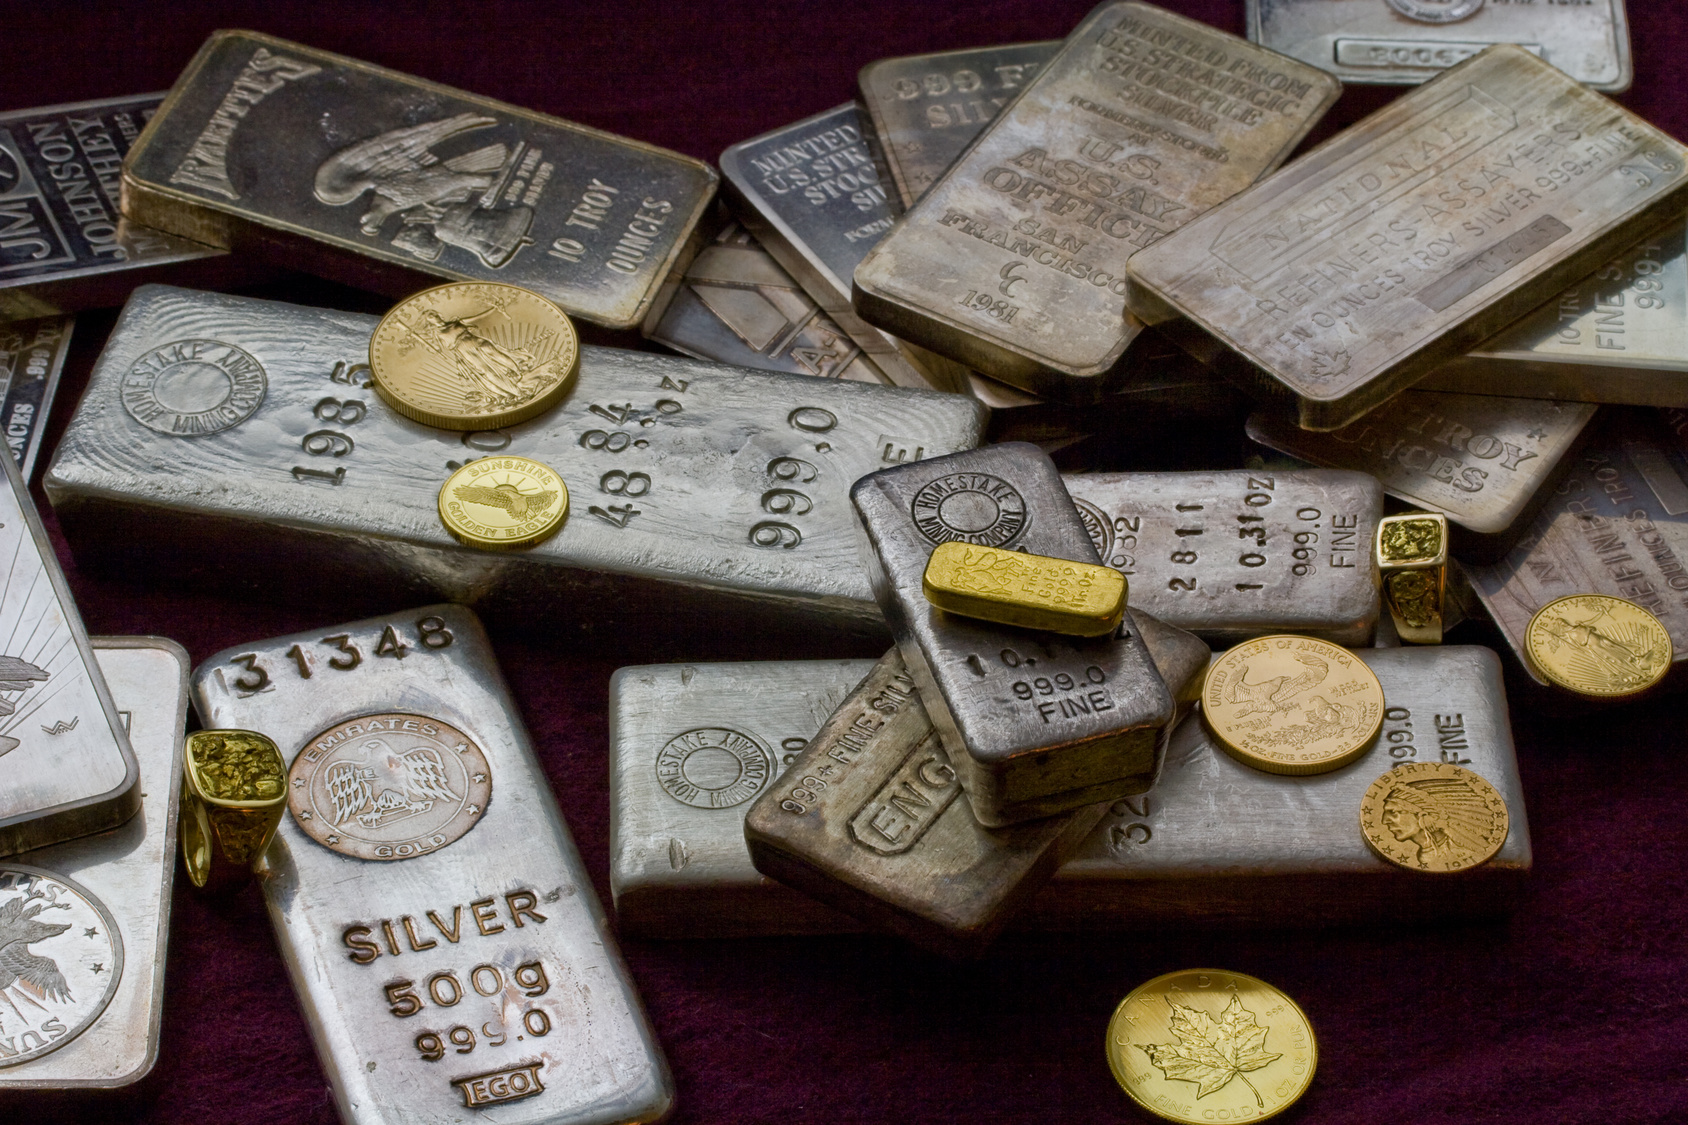 Bob Moriarty: I Am Ready To Buy Silver At $16